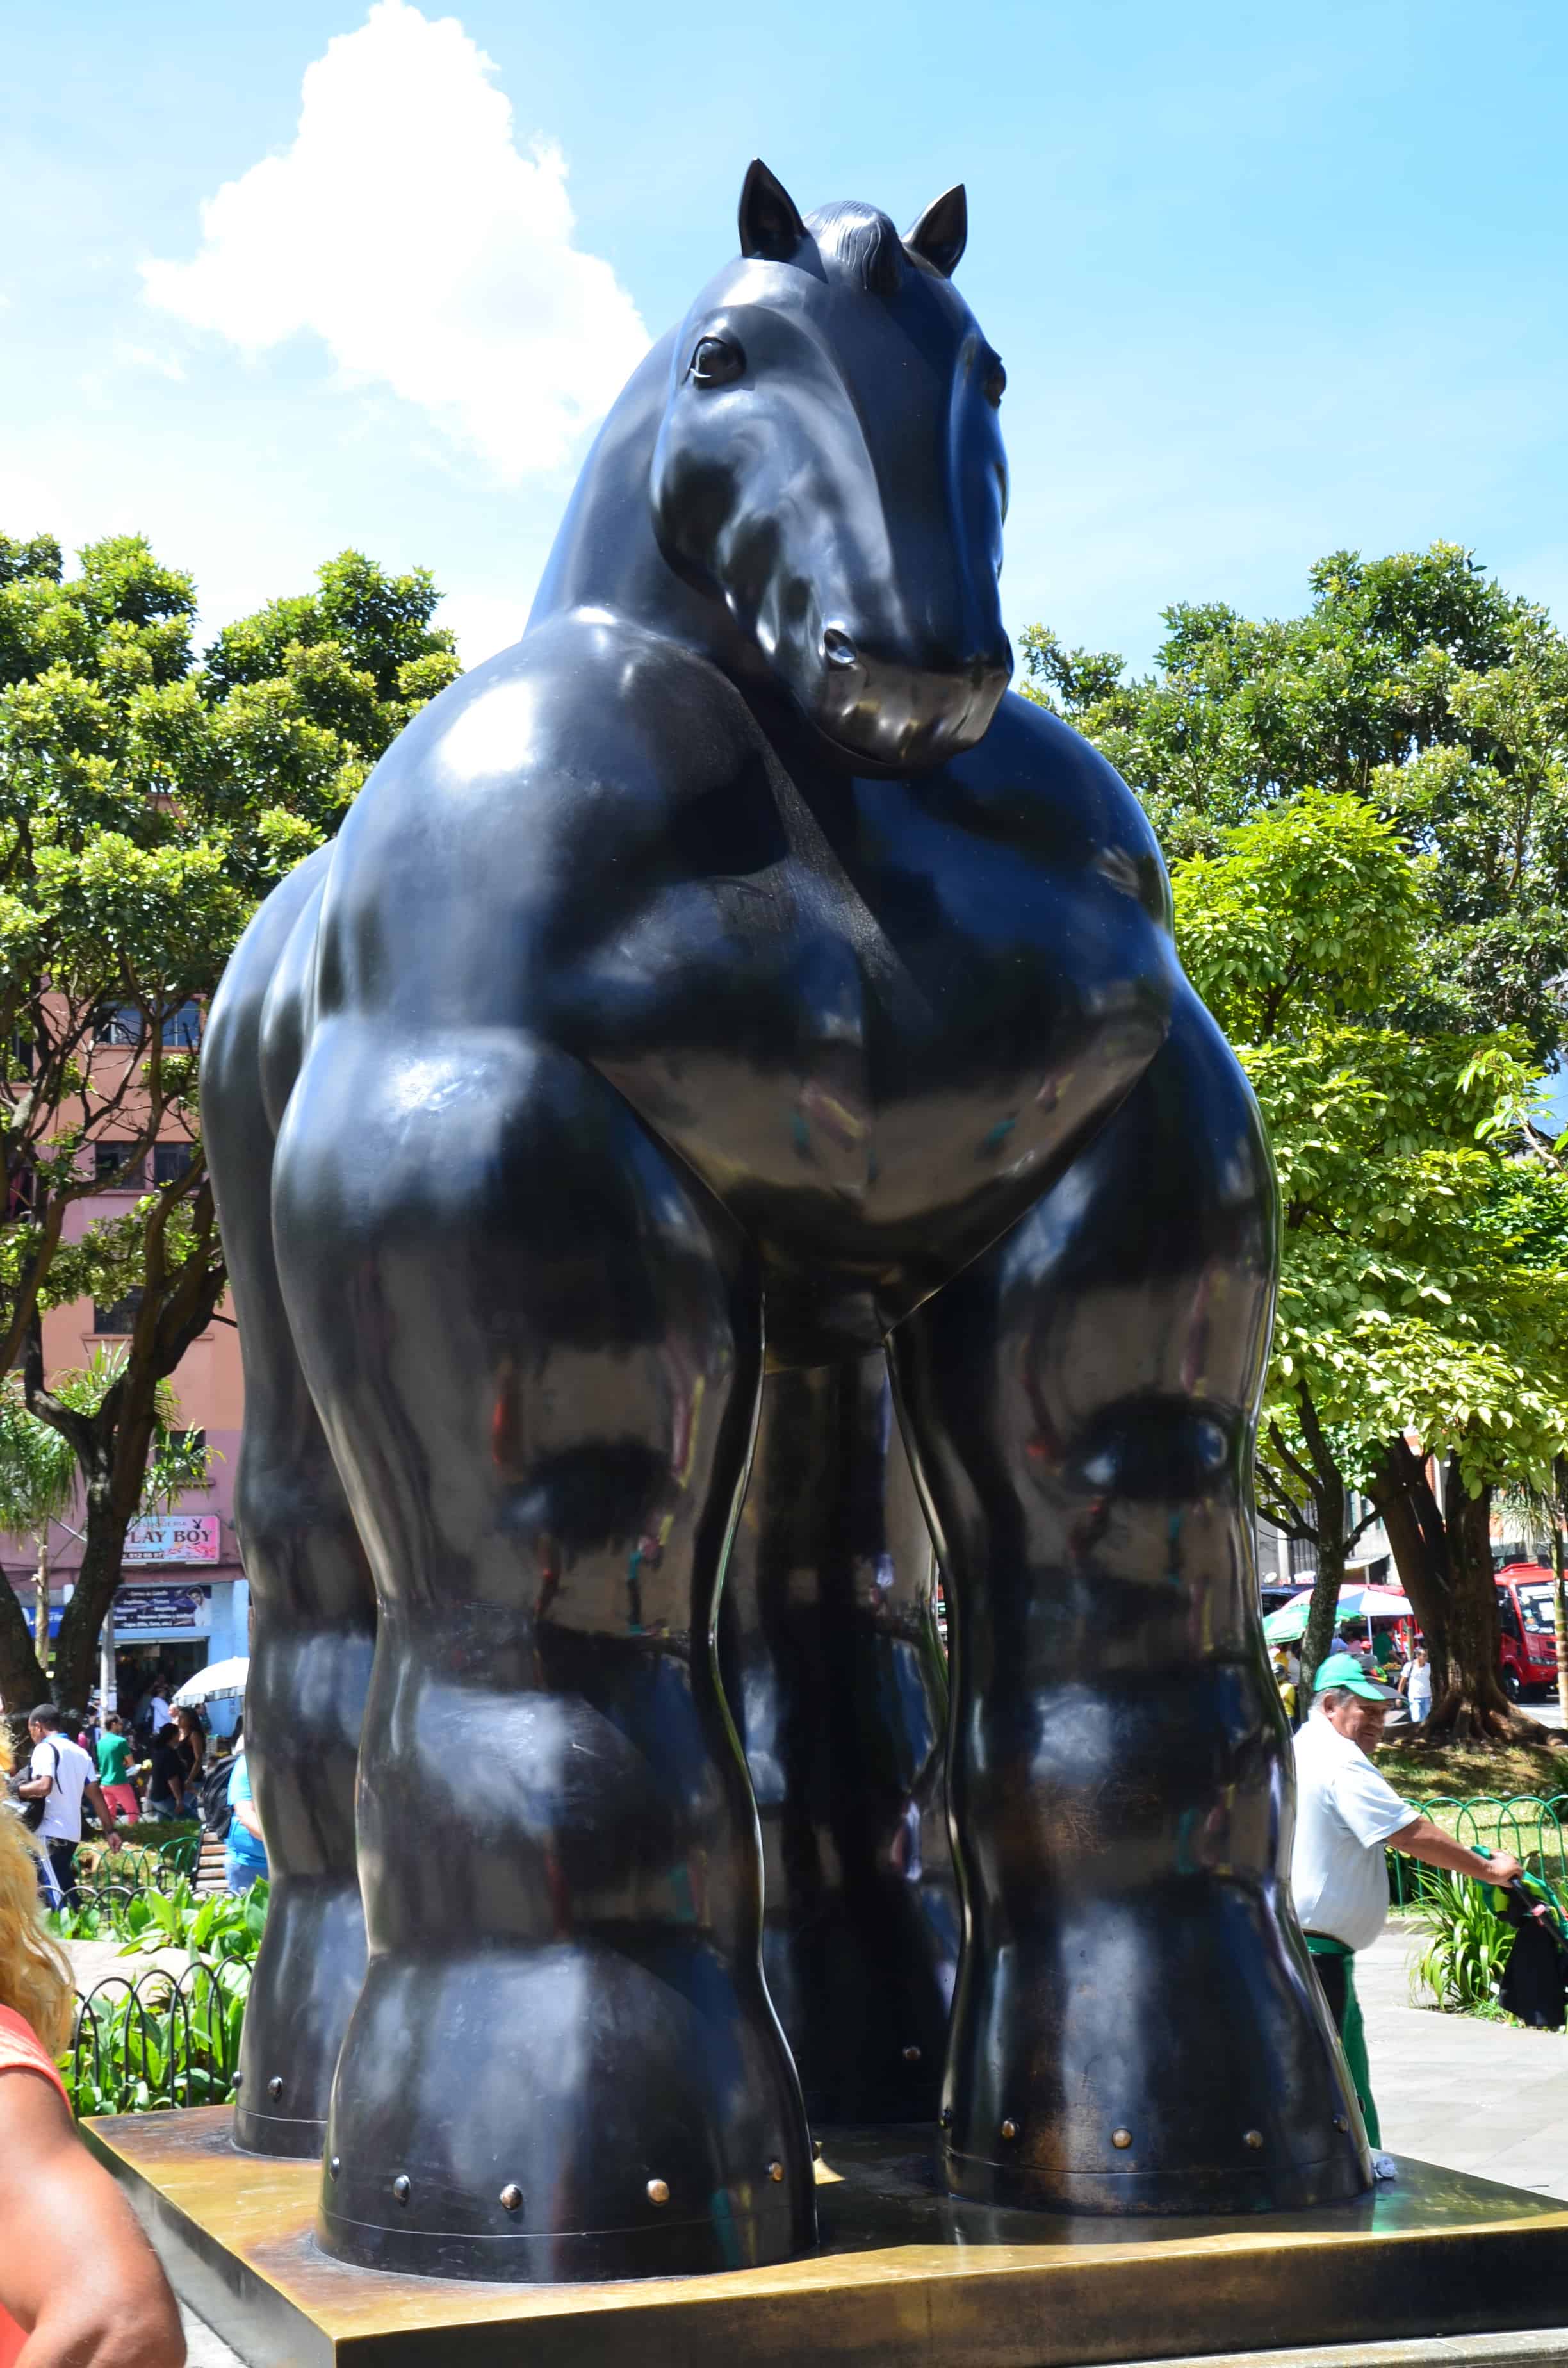 Caballo (Horse) at Plaza Botero in Medellín, Antioquia, Colombia